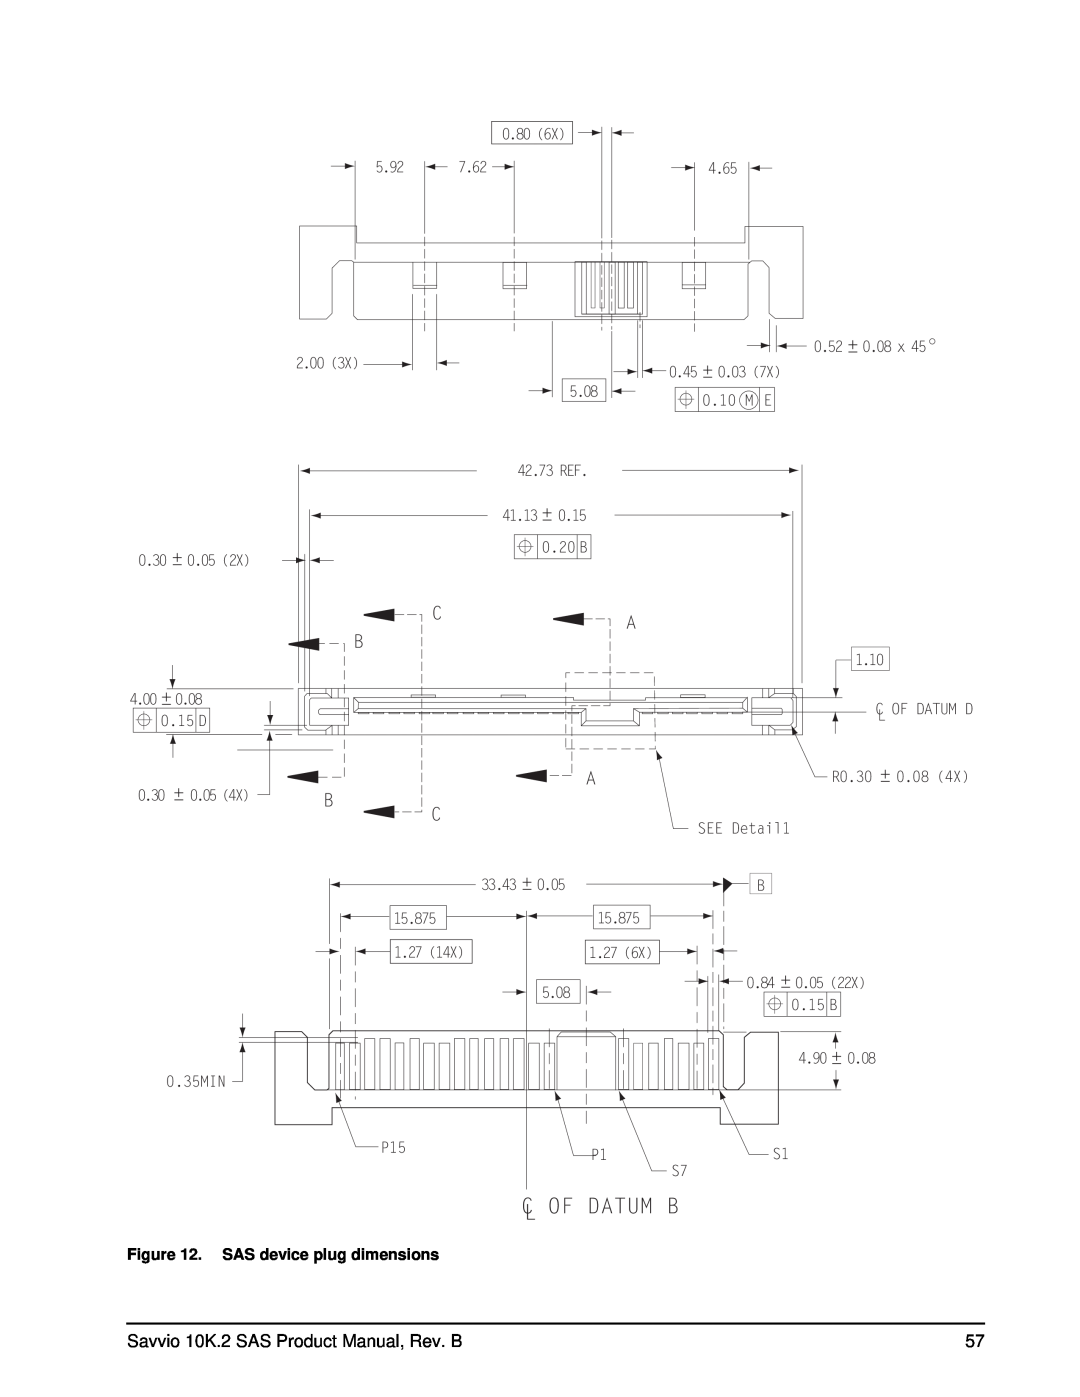 Seagate ST9146802SS, ST973402SS manual C Of Datum B L, SAS device plug dimensions 